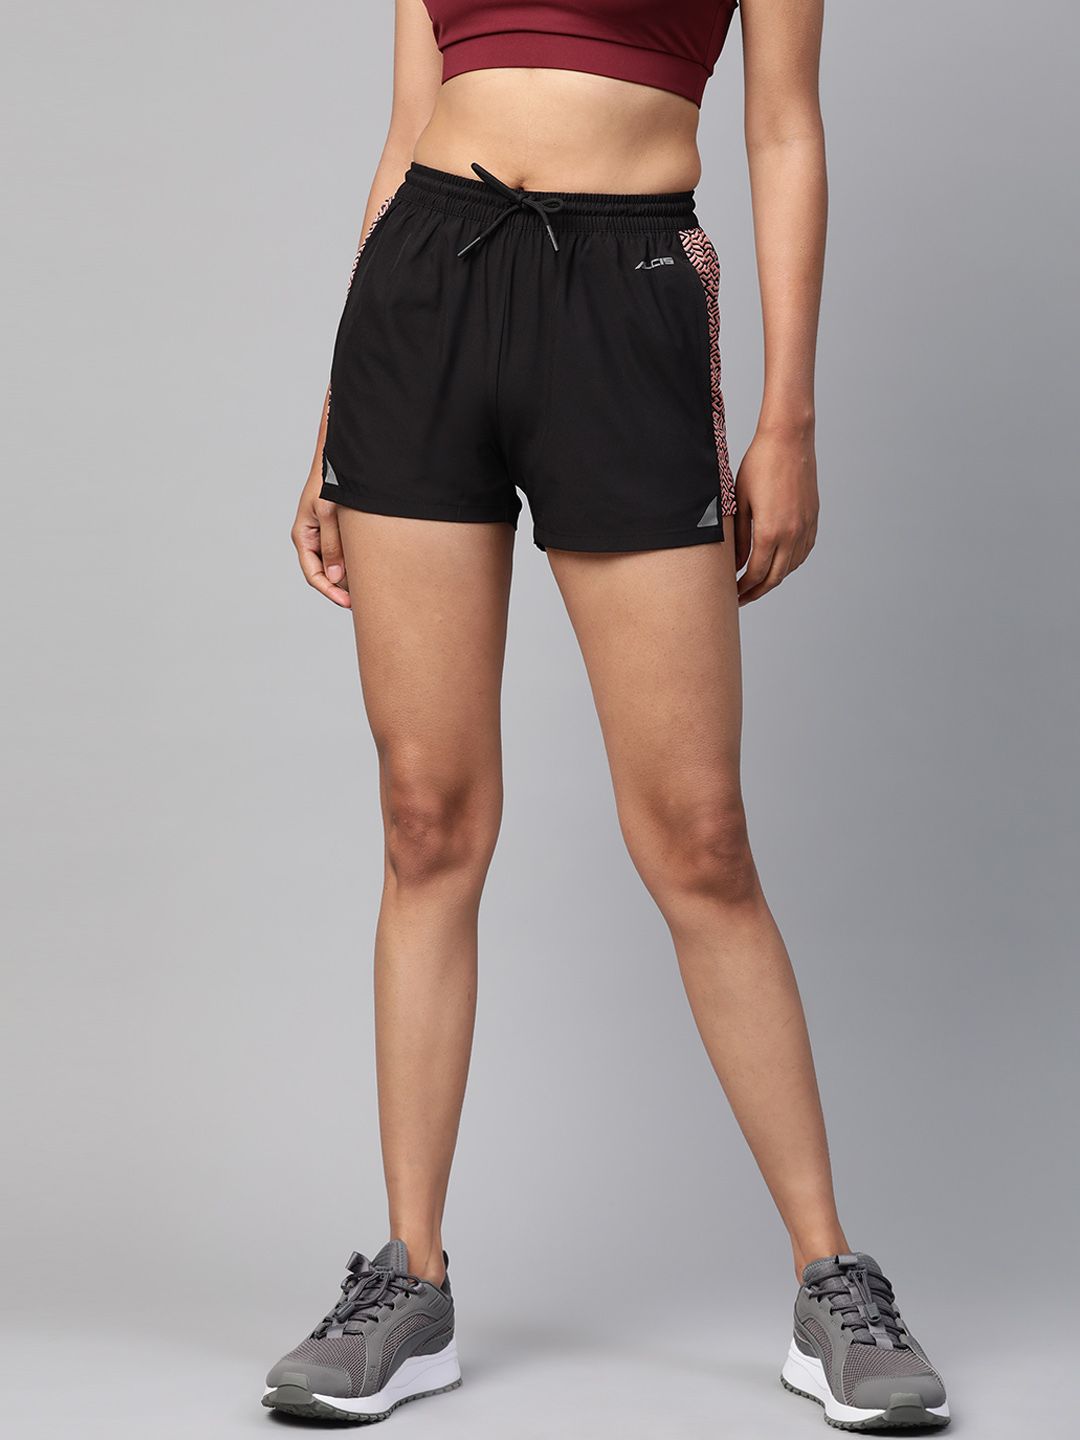 Alcis Women Black Solid Slim Fit Regular Shorts Price in India